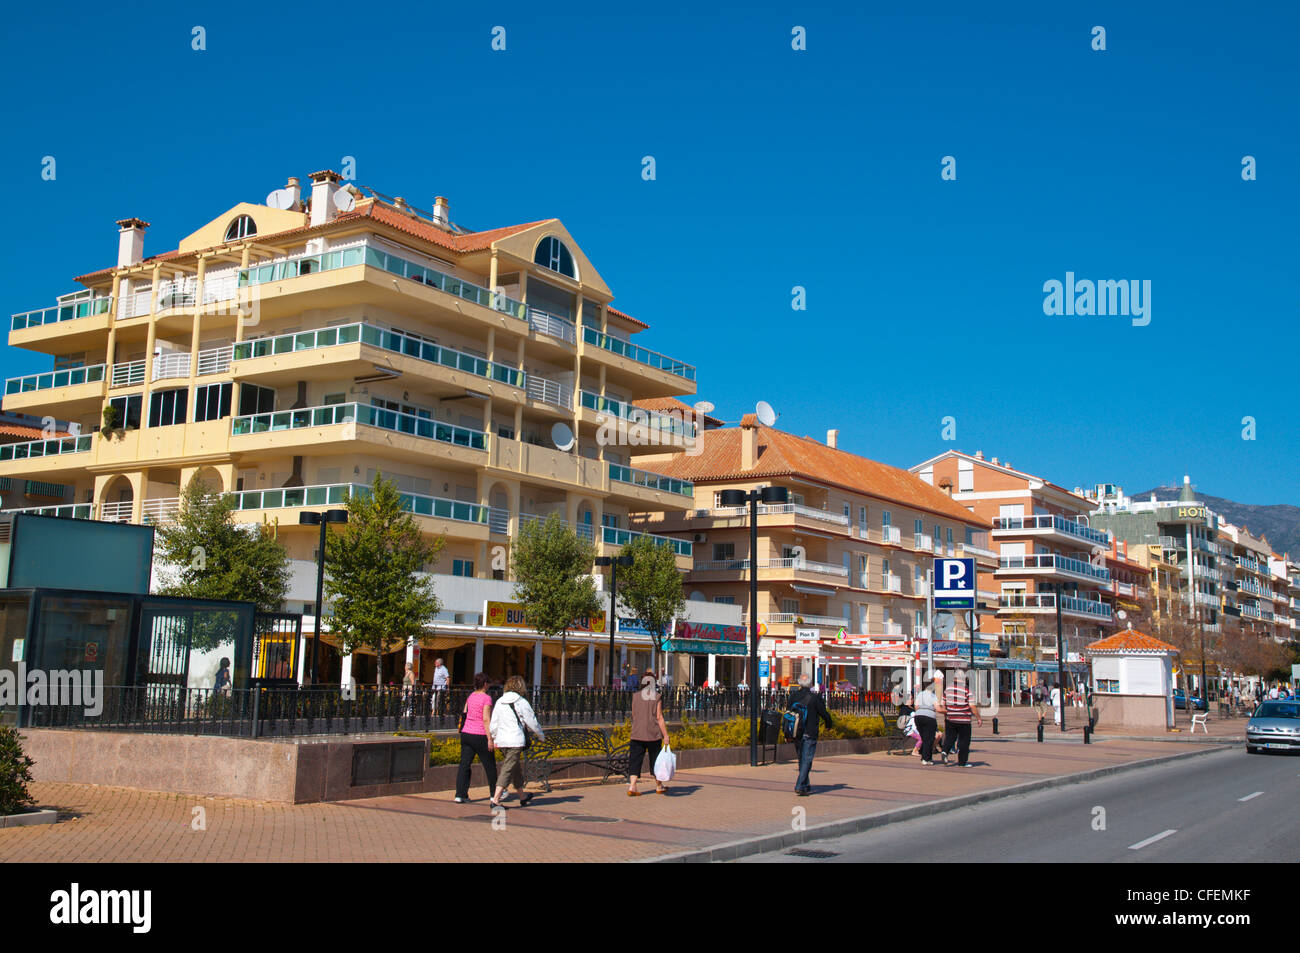 Paseo Maritimo seaside promenade Fuengirola city Costa del Sol coast the Malaga region Andalusia Spain Europe Stock Photo